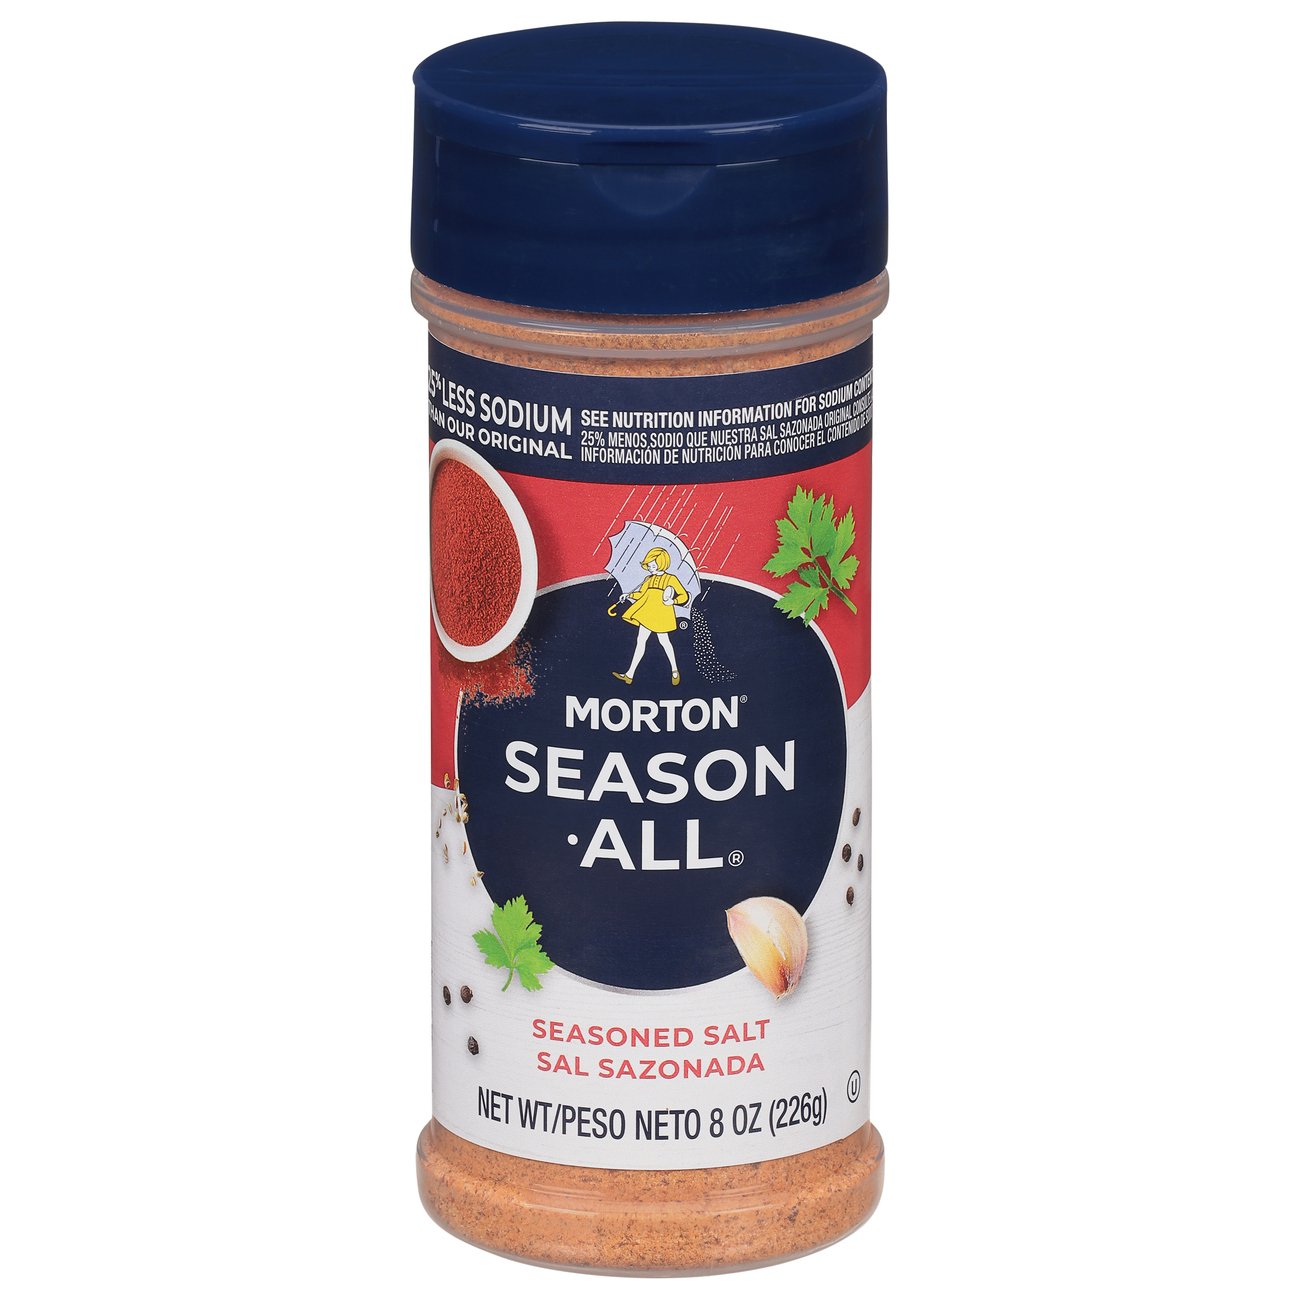 Salt-free Seasoning — Seaons of Taos